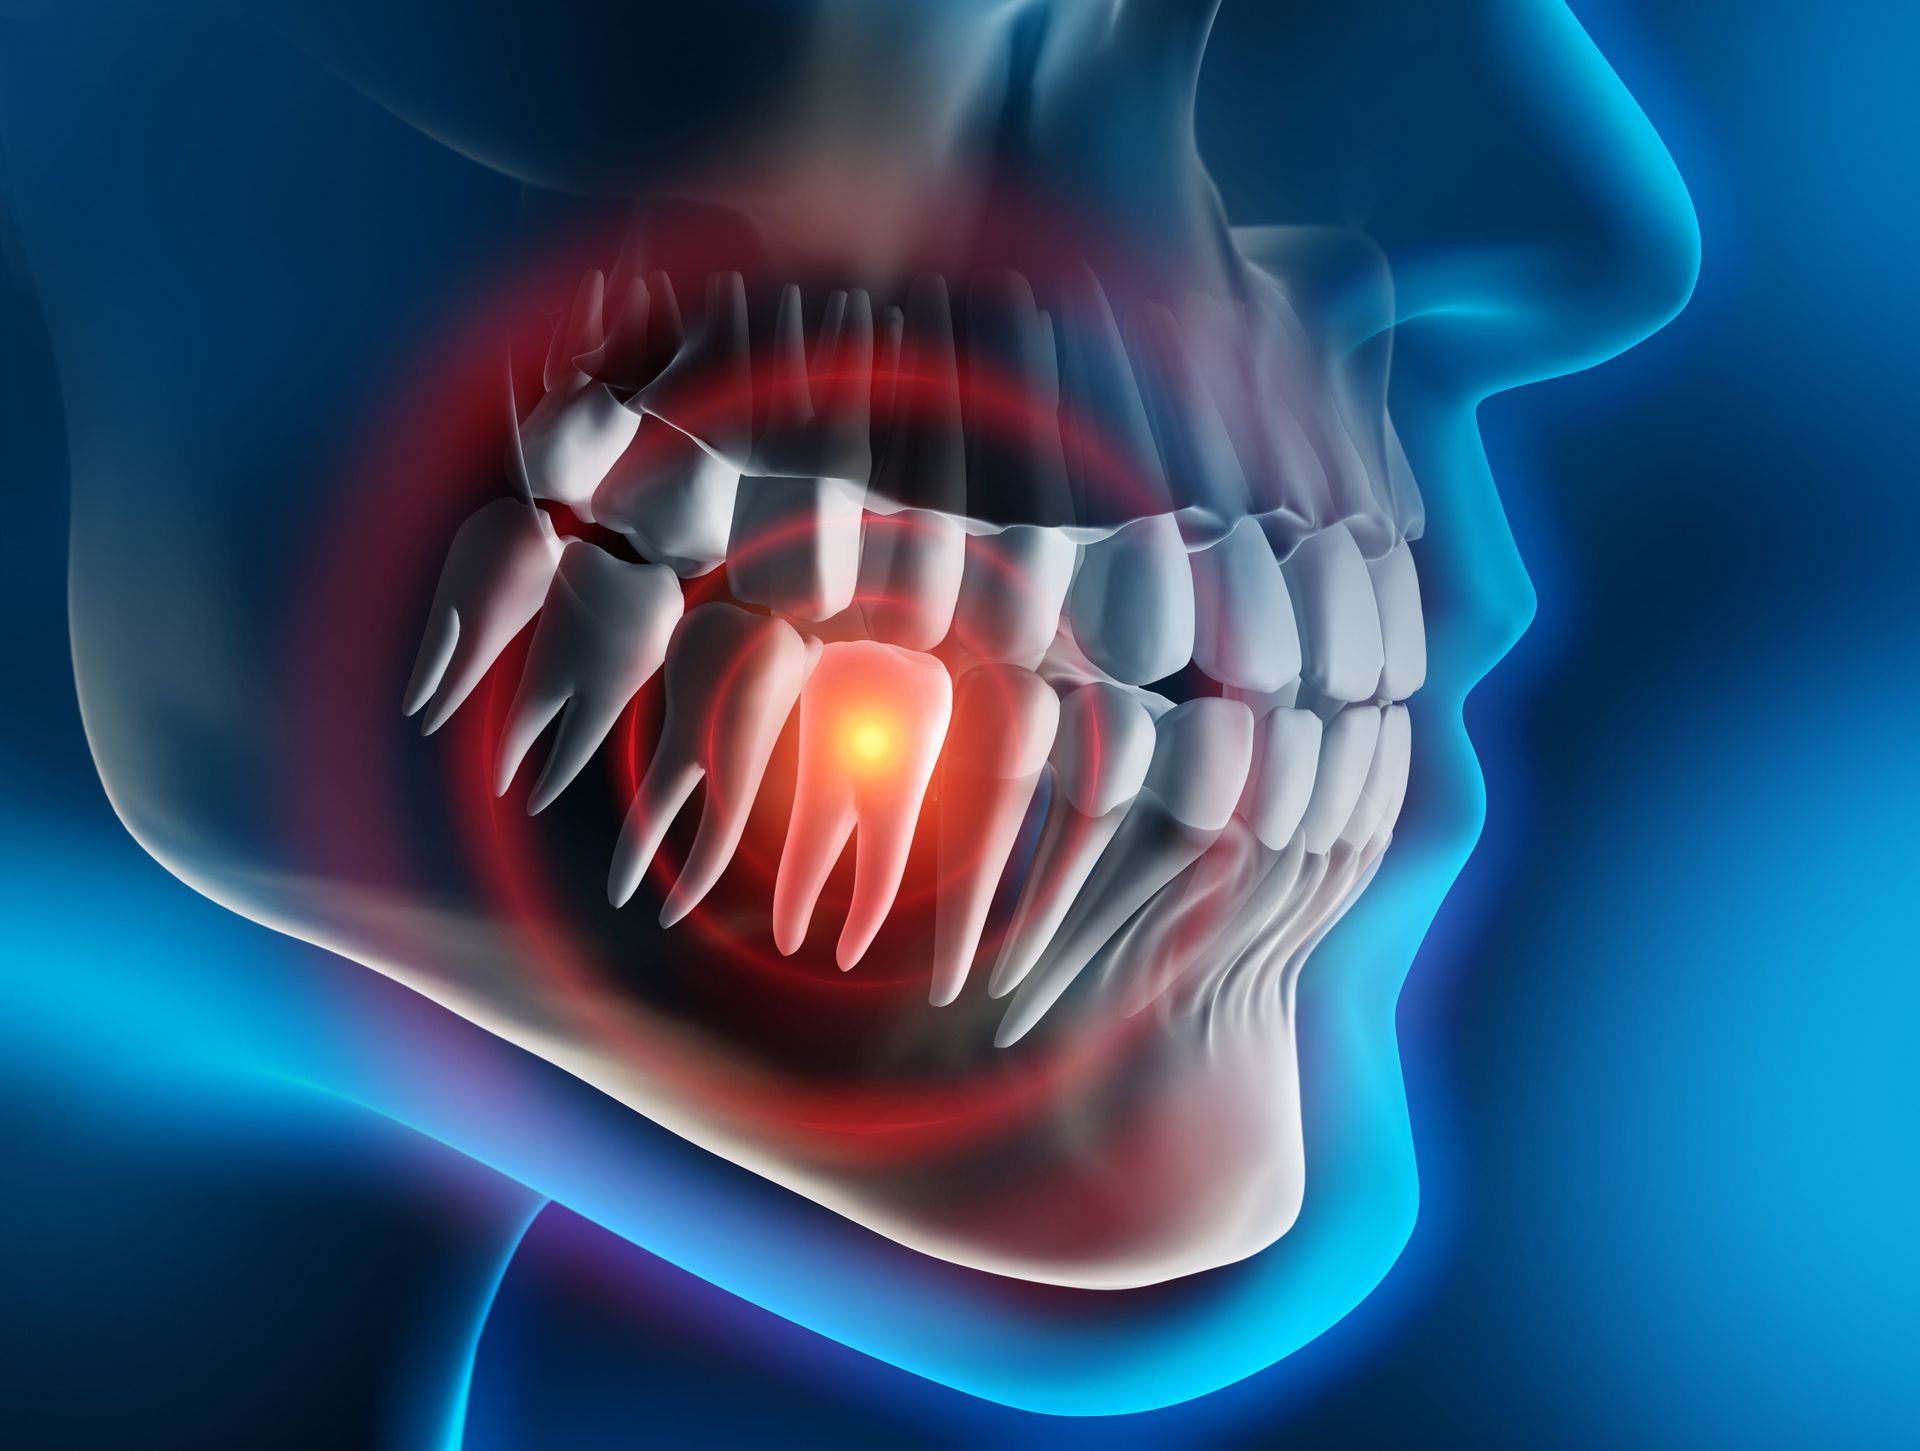 Tooth pain illustration